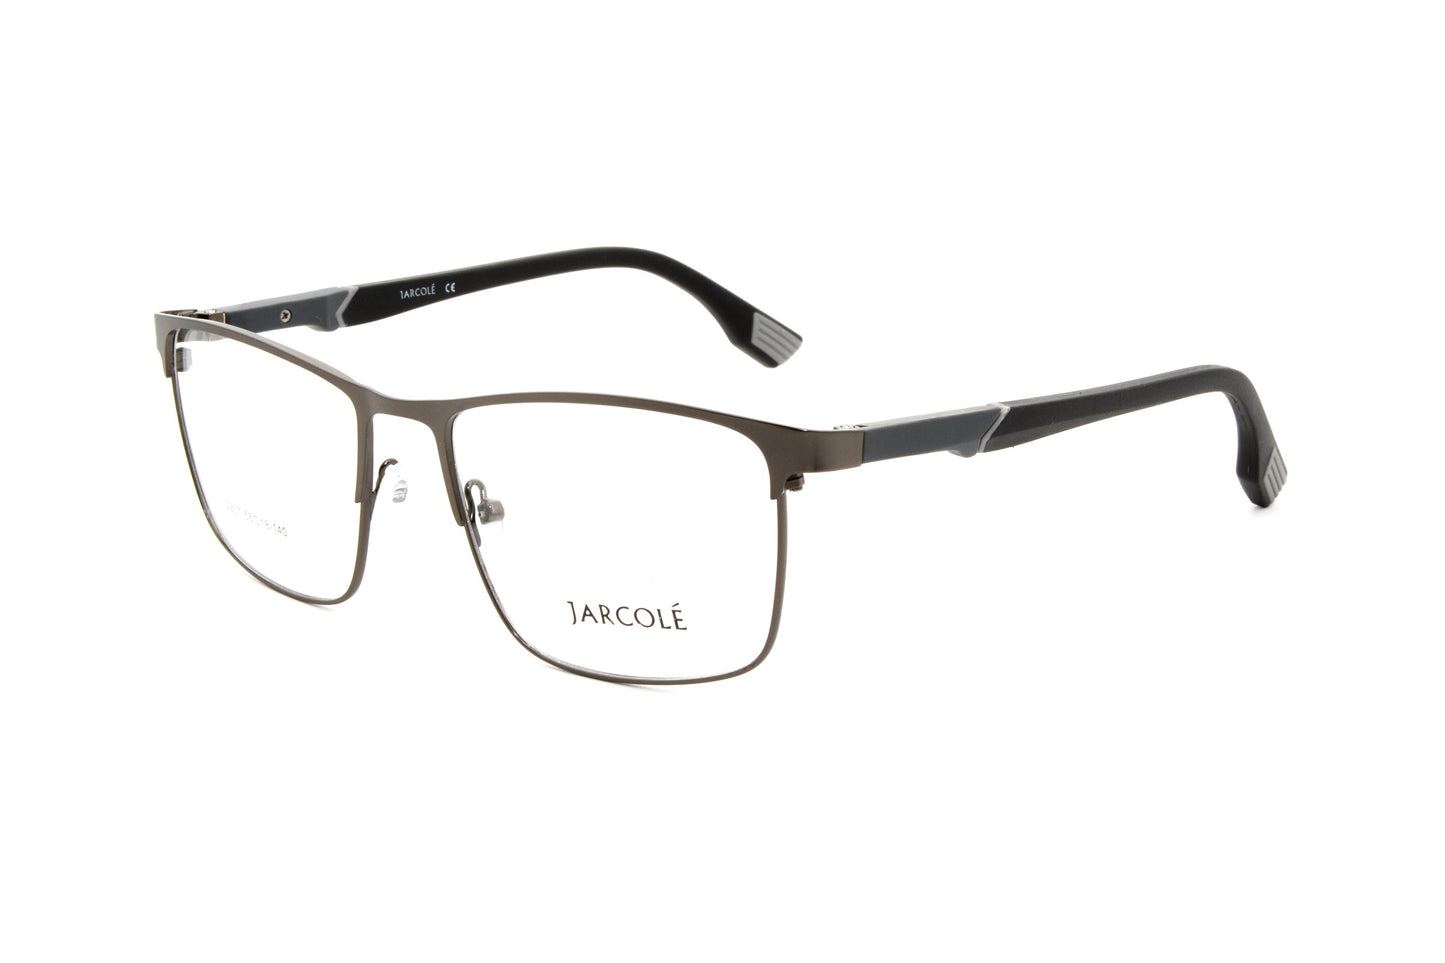 Jarcole eyewear 2207 C4